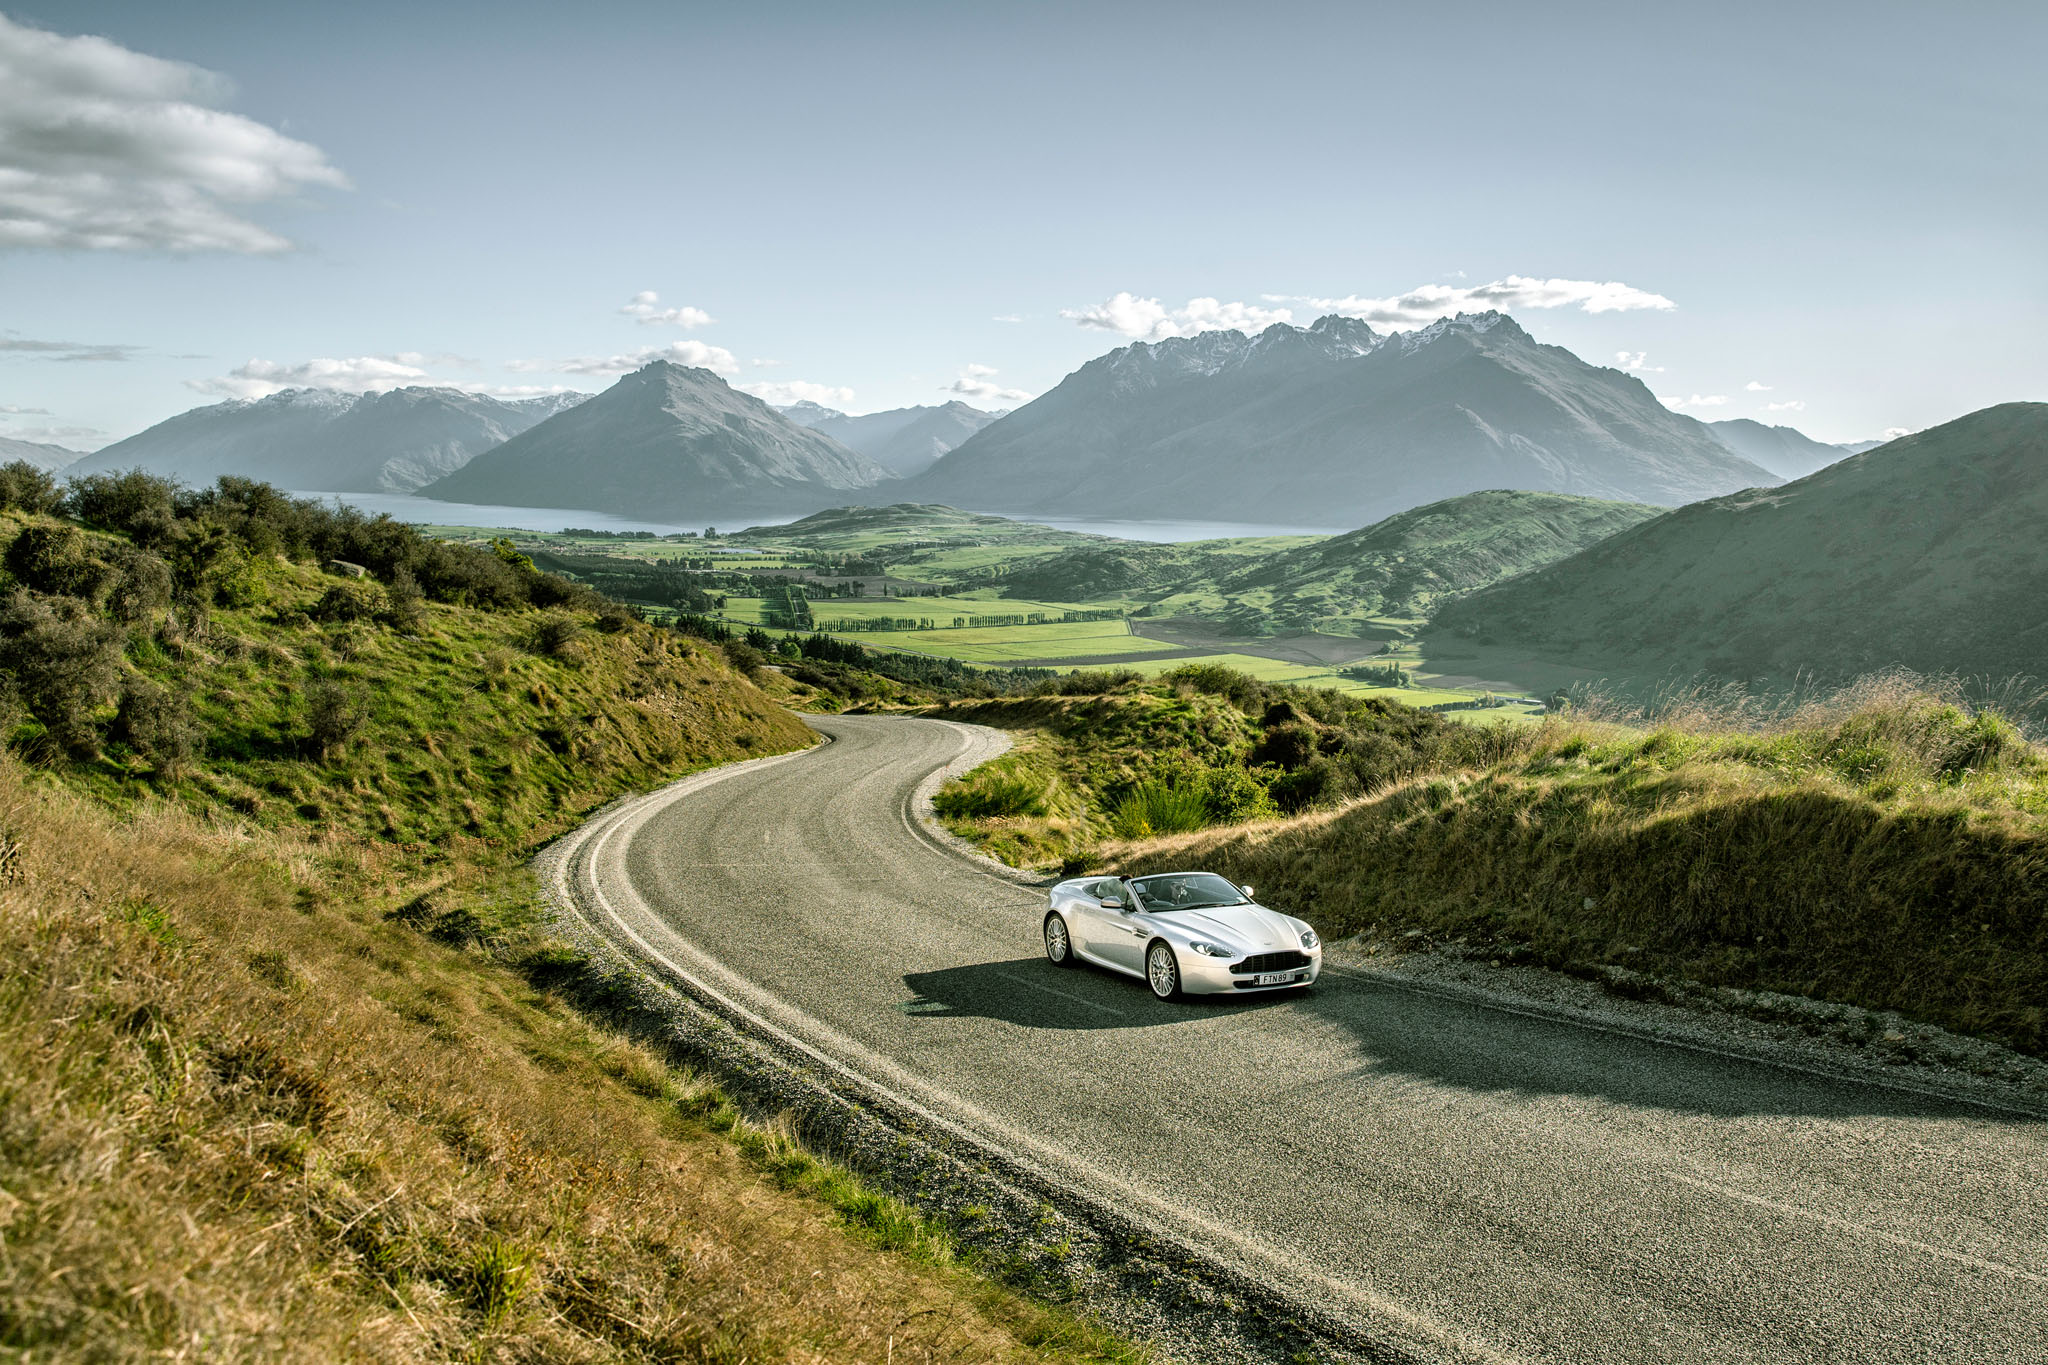 Car Photography in Queenstown, New Zealand, Aston Martin on mountain road in Queenstown New Zealand